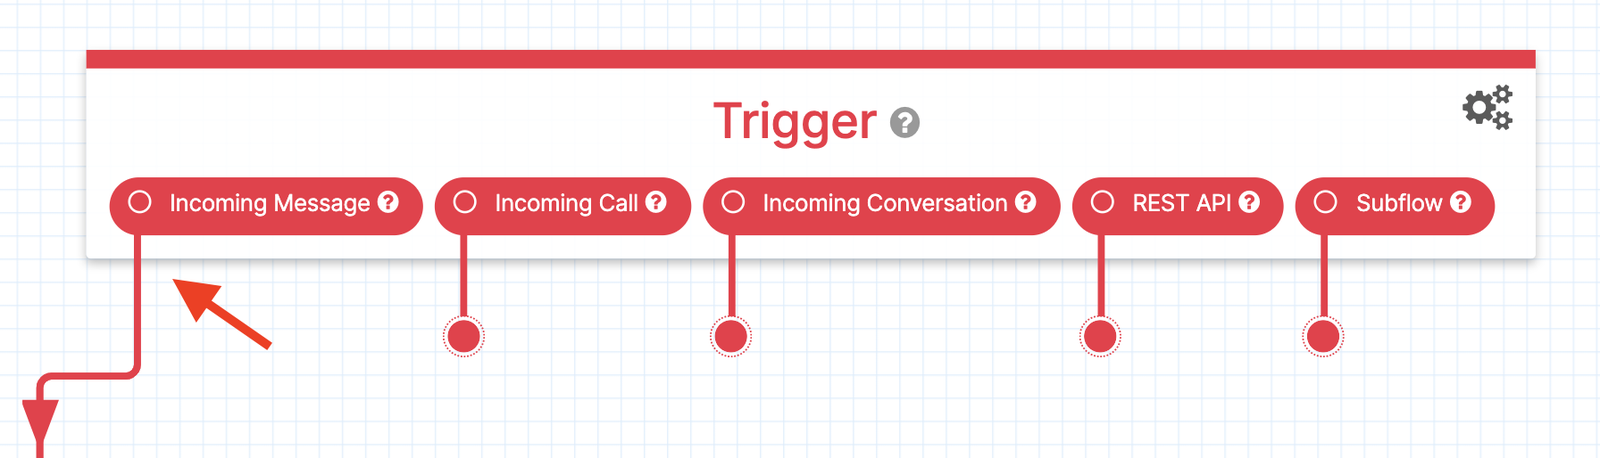 Twilio Studio Tutorial Send to Slack arrow pointing to Incoming Message trigger on the Trigger (Start) Widget.